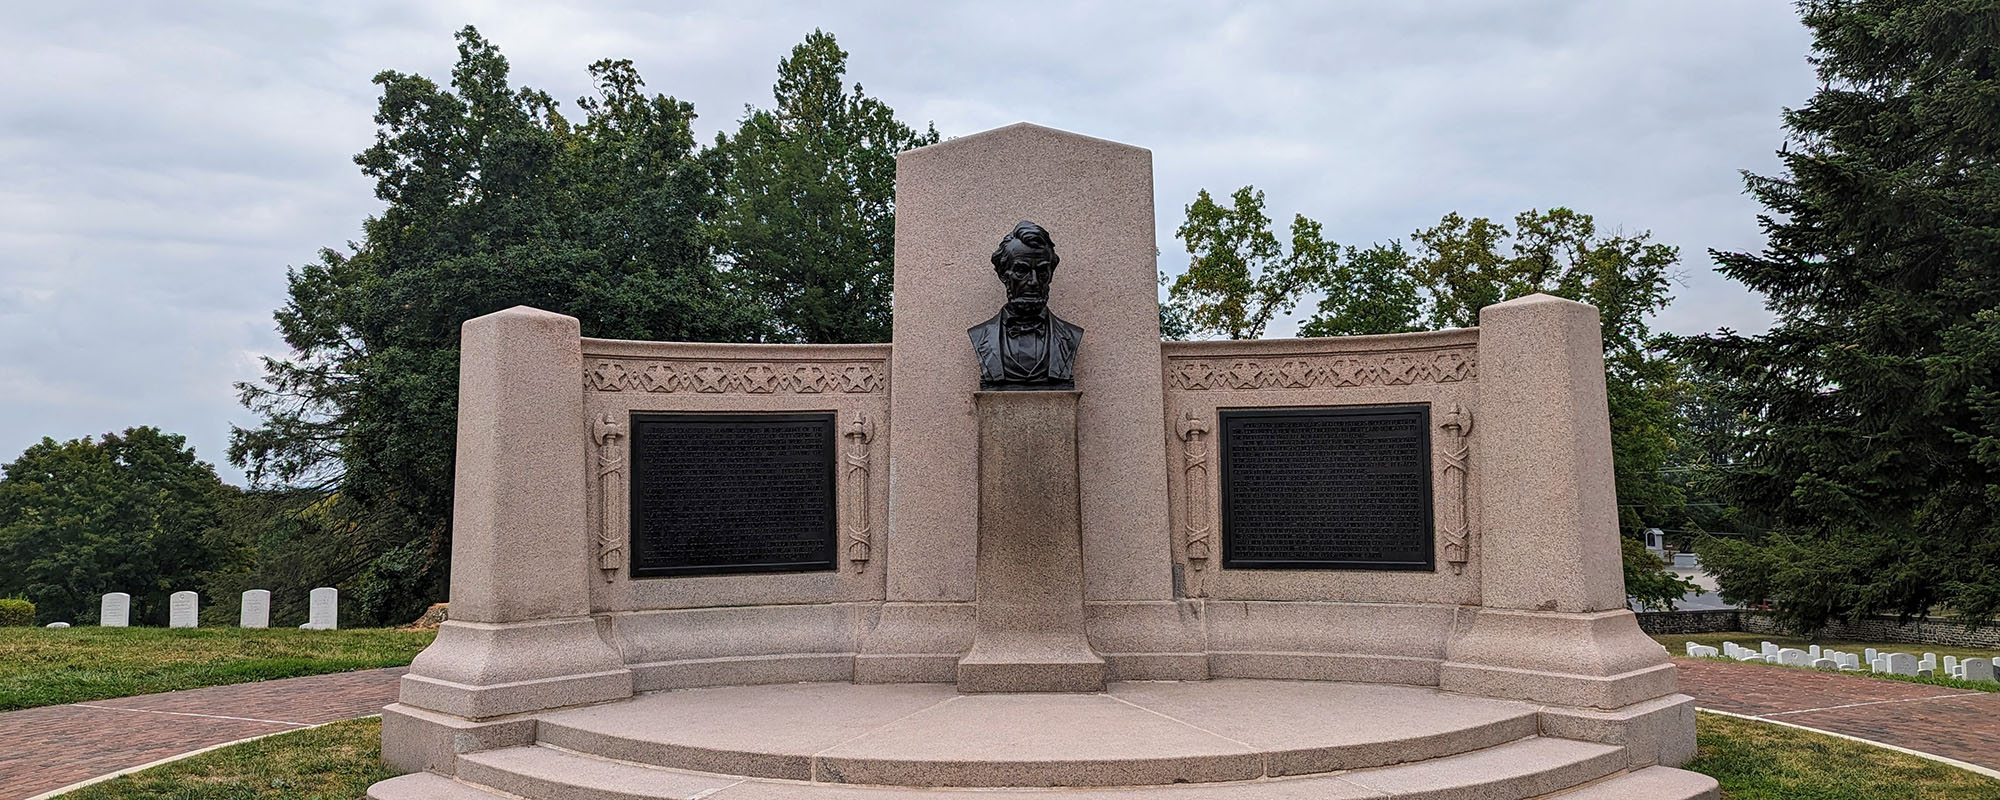 Memorial to the Gettysburg Address in the National Cemetery in Gettysburg, Pennsylvania